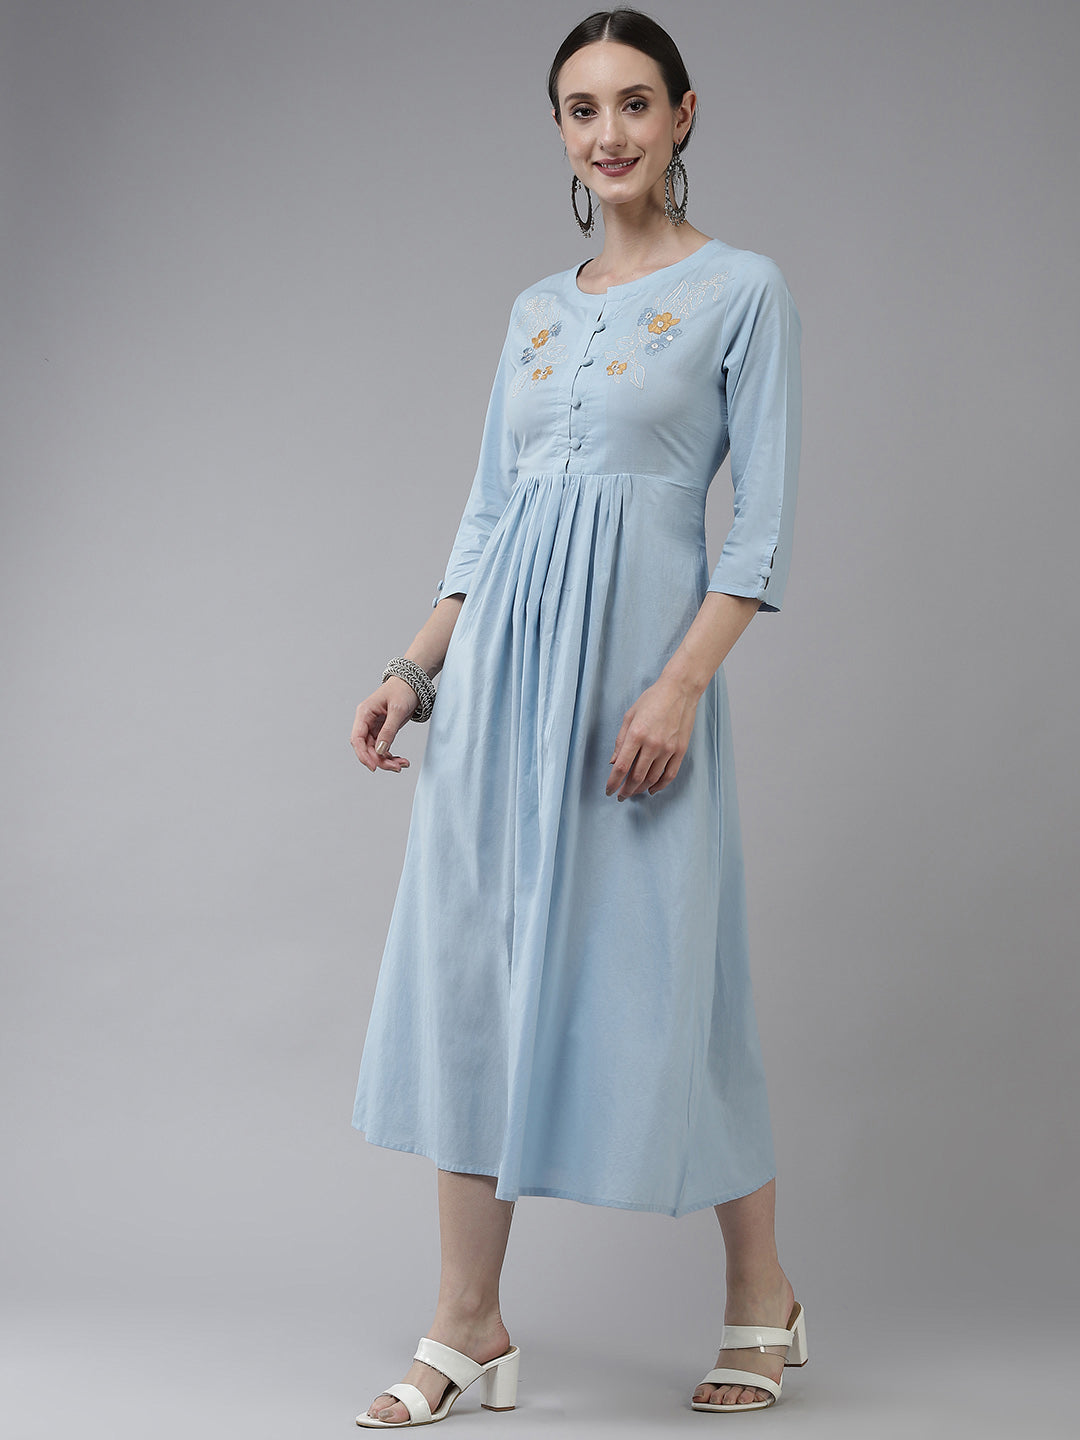 Blue Ethnic Midi Dress-Yufta Store-9784DRSBLS